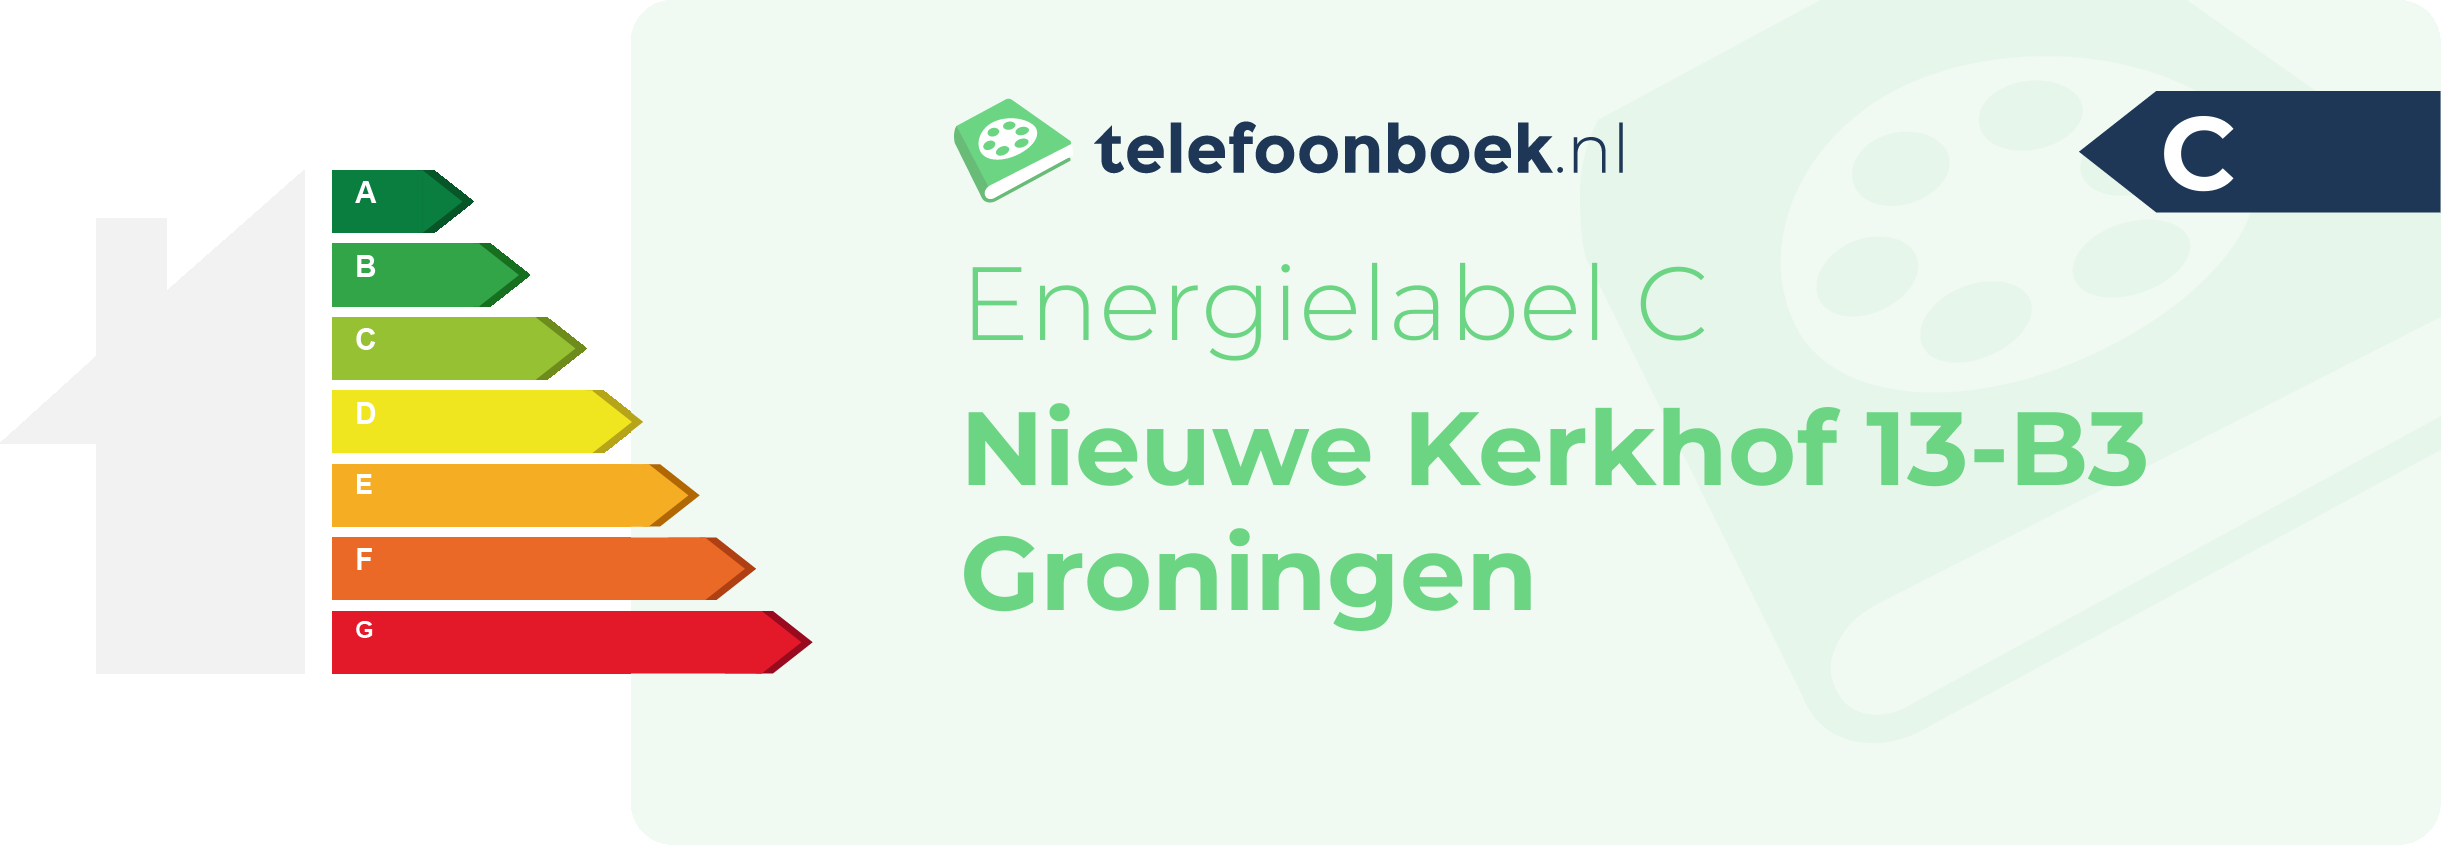 Energielabel Nieuwe Kerkhof 13-B3 Groningen